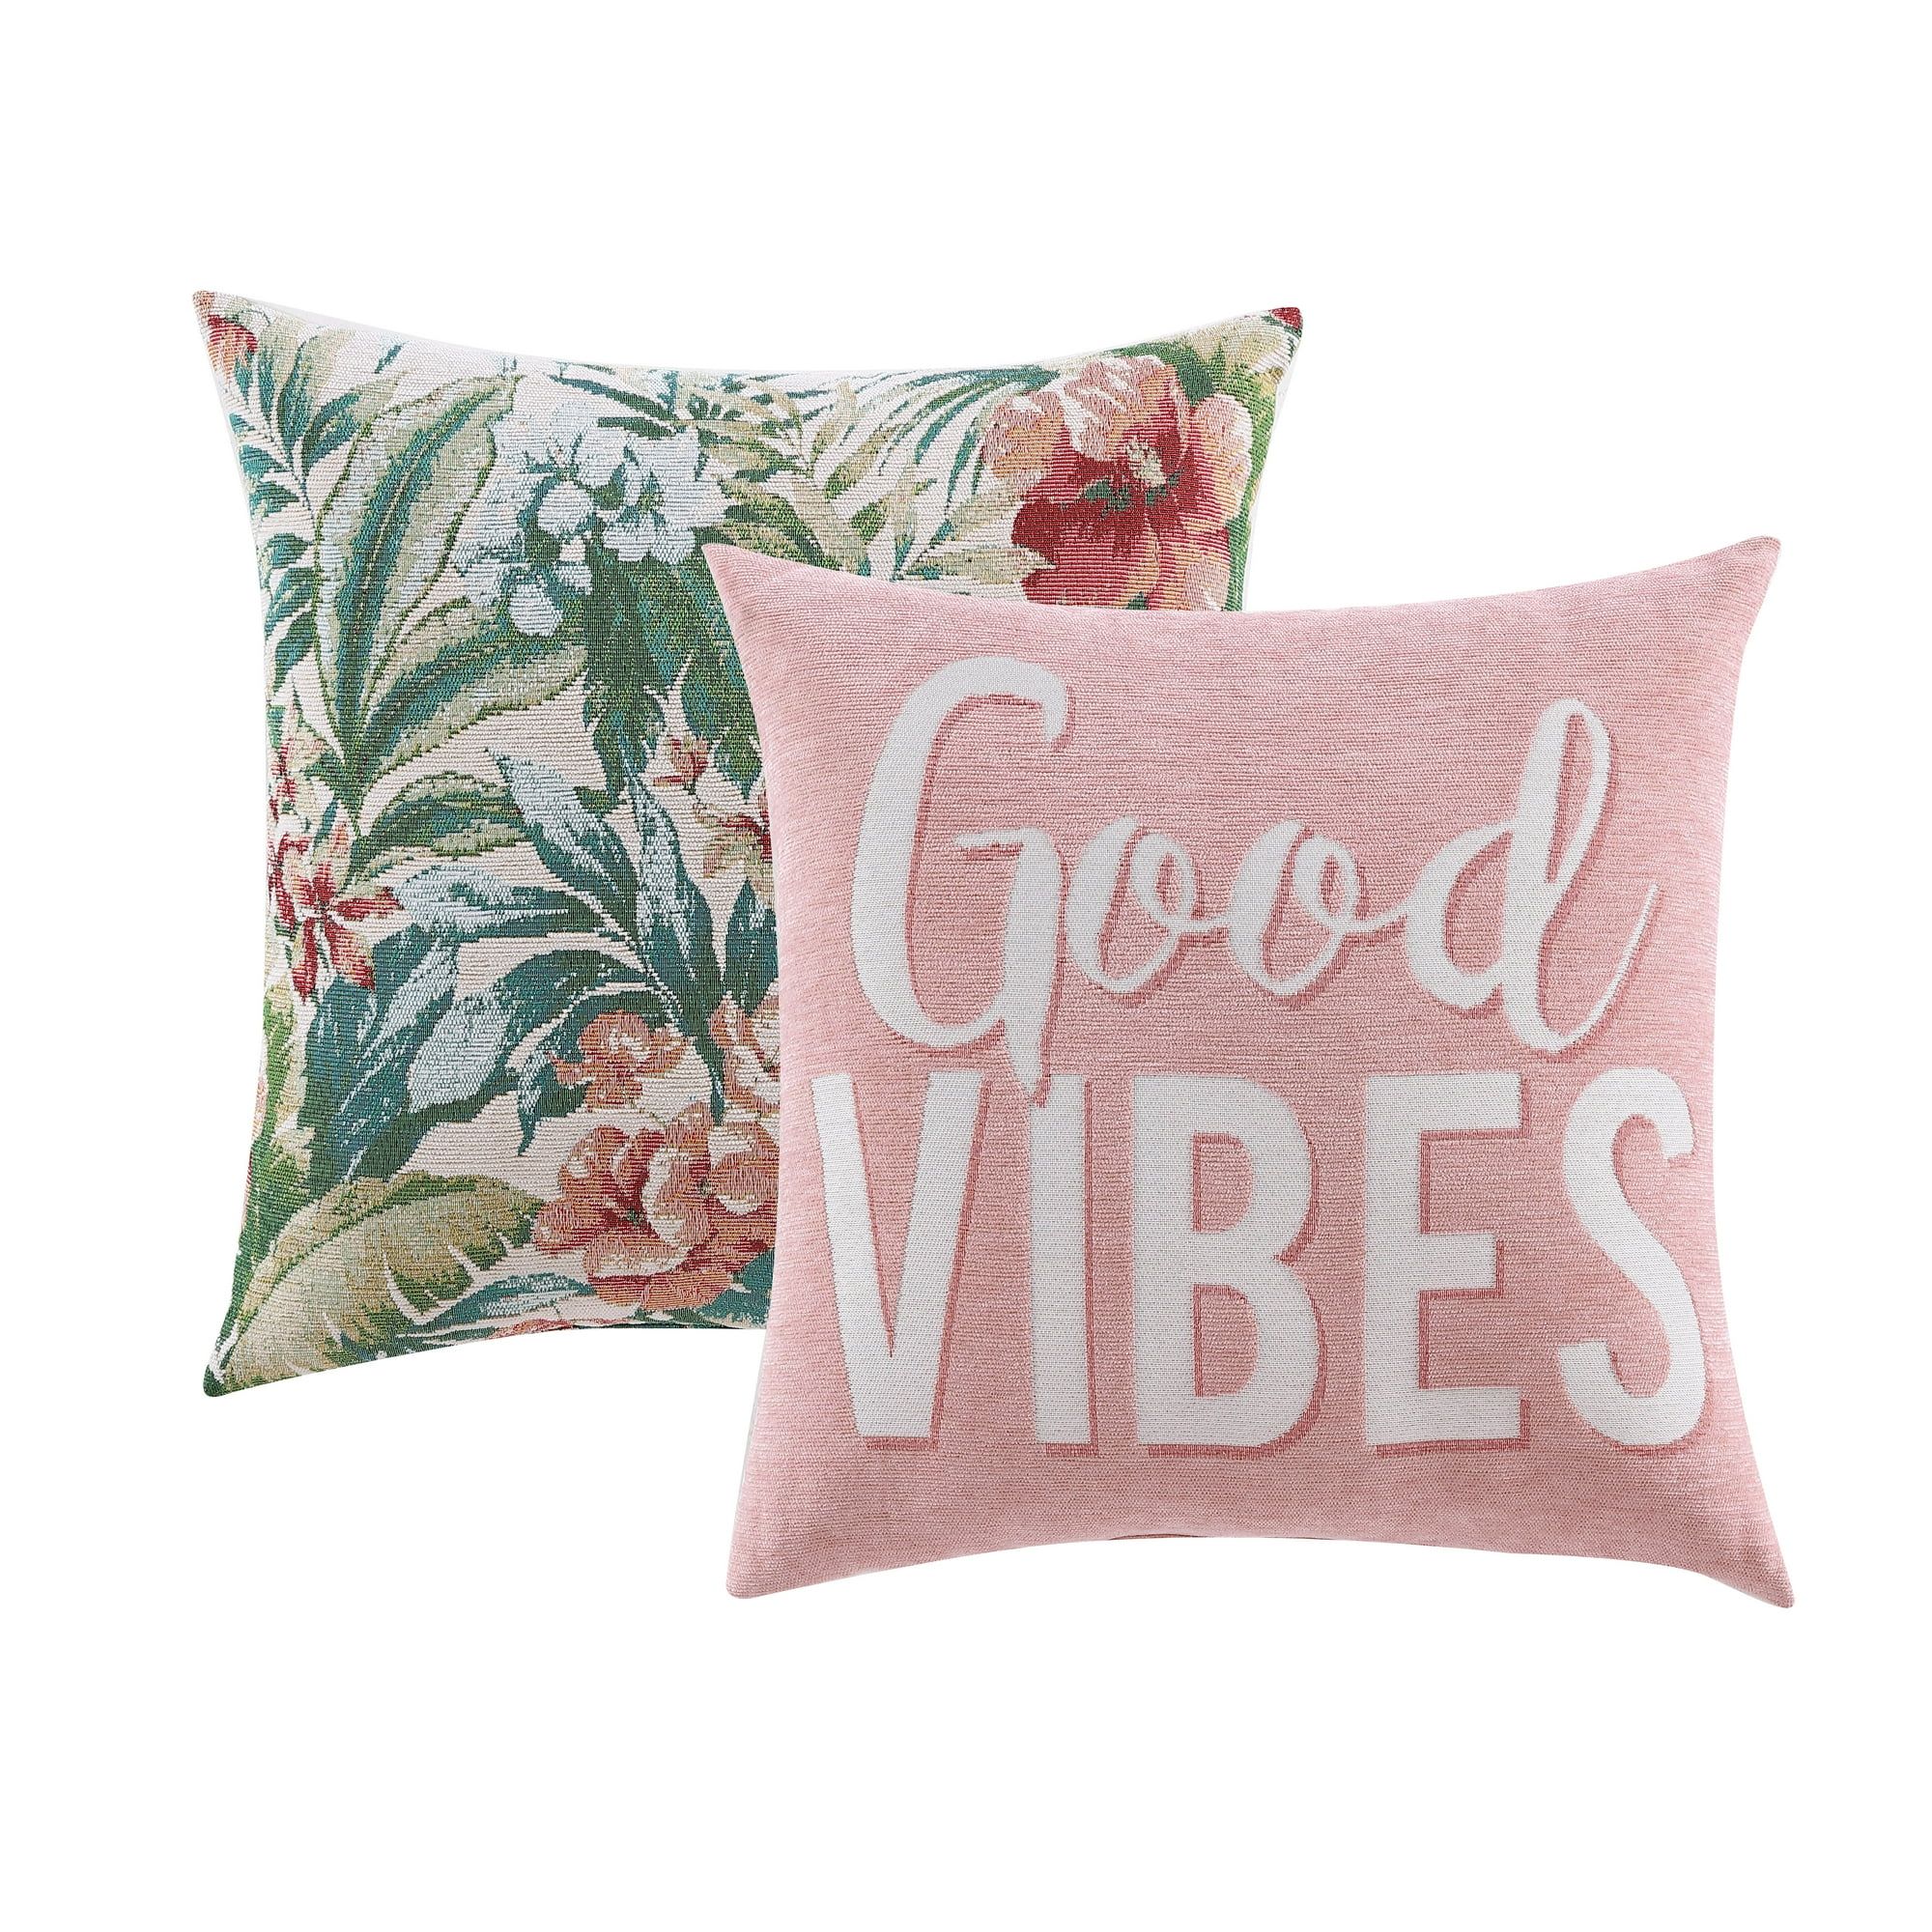 Mainstays Decorative Throw Pillow, Chenille Jacquard Good Vibe, Square, Multi, 17" x 17", 2 Pack | Walmart (US)